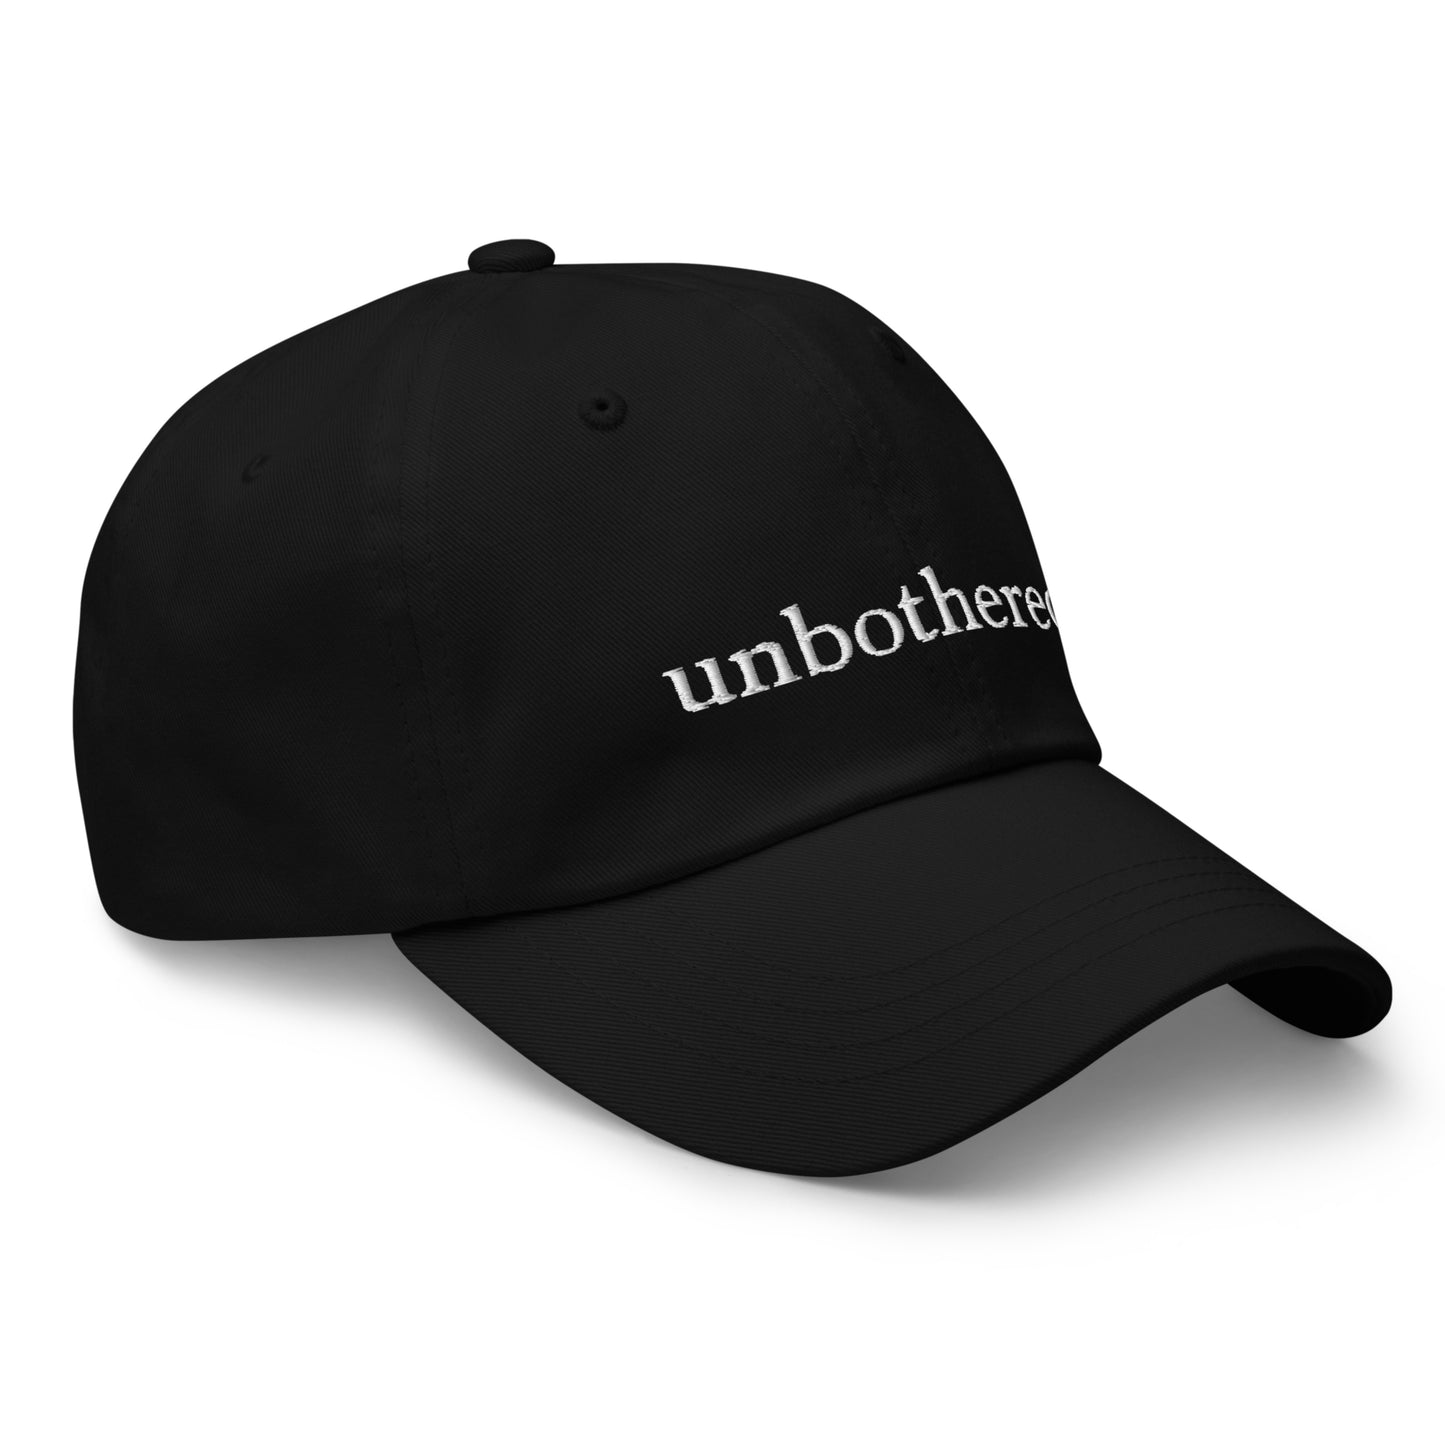 POTSH Classic Black "UNBOTHERED" Hat